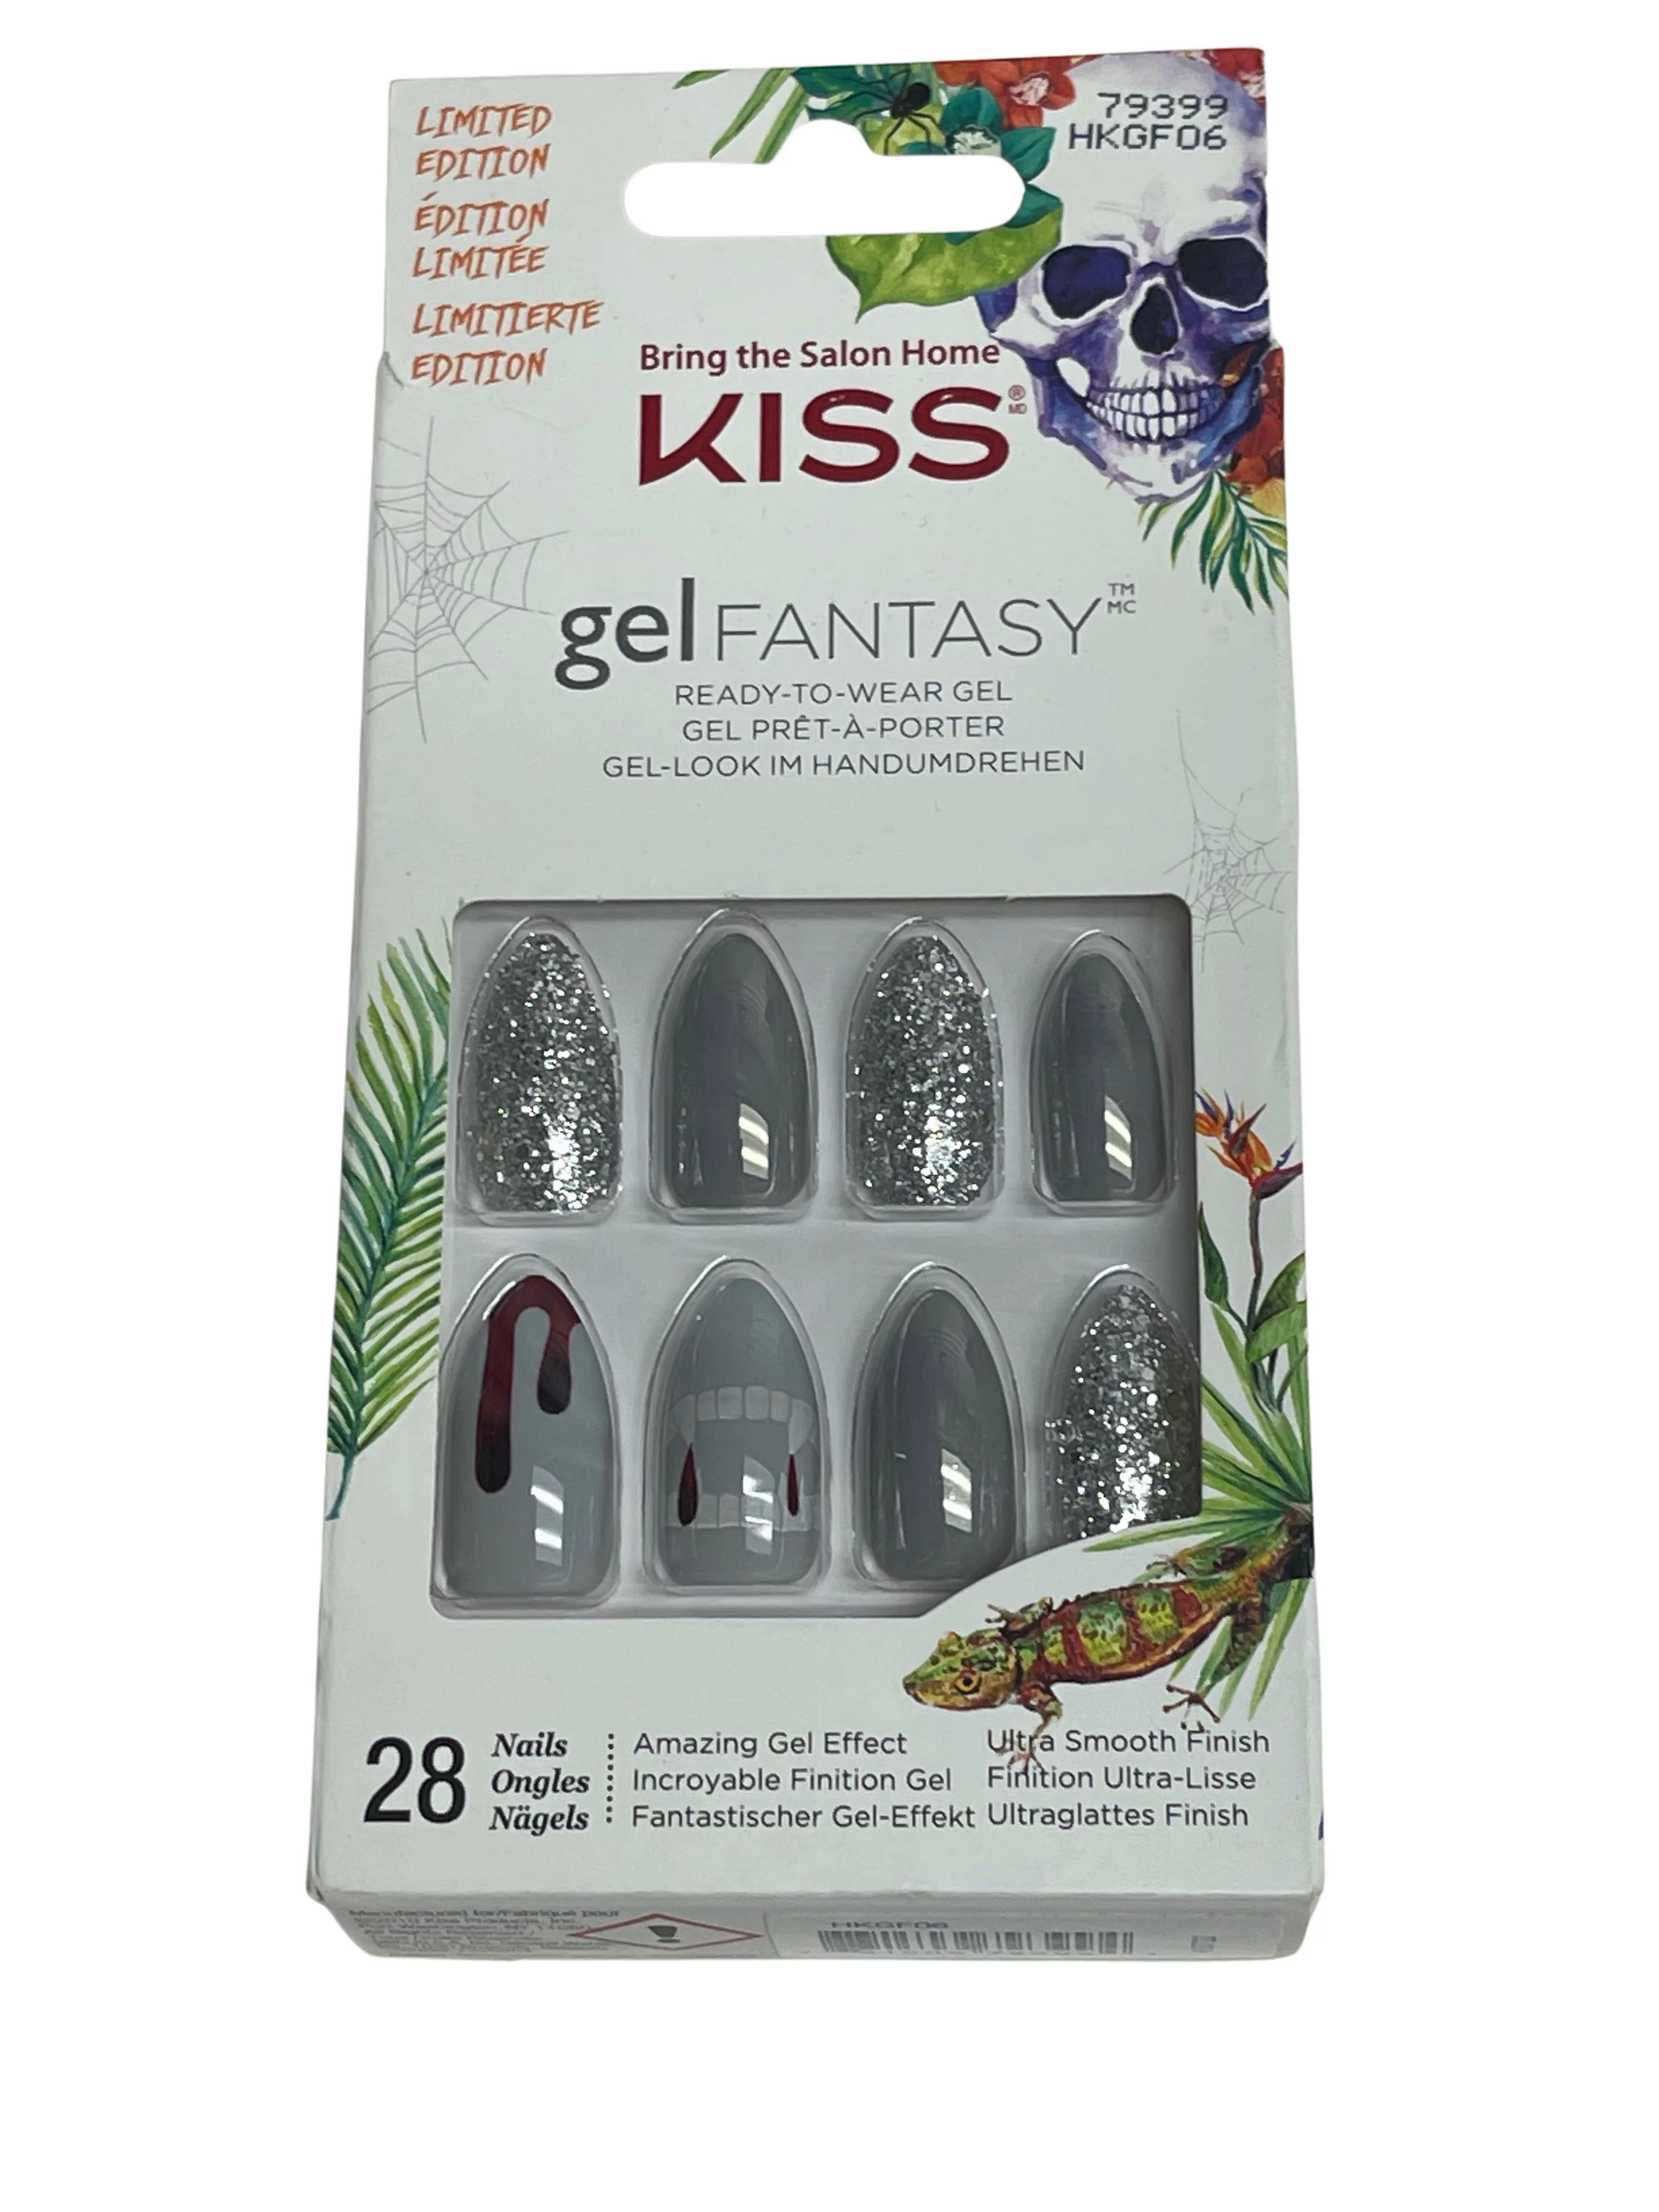 Kiss Gel Fantasy Limited Edition Nails Gray Vampire Almond Shape 79399 HKGF06 | Walmart (US)